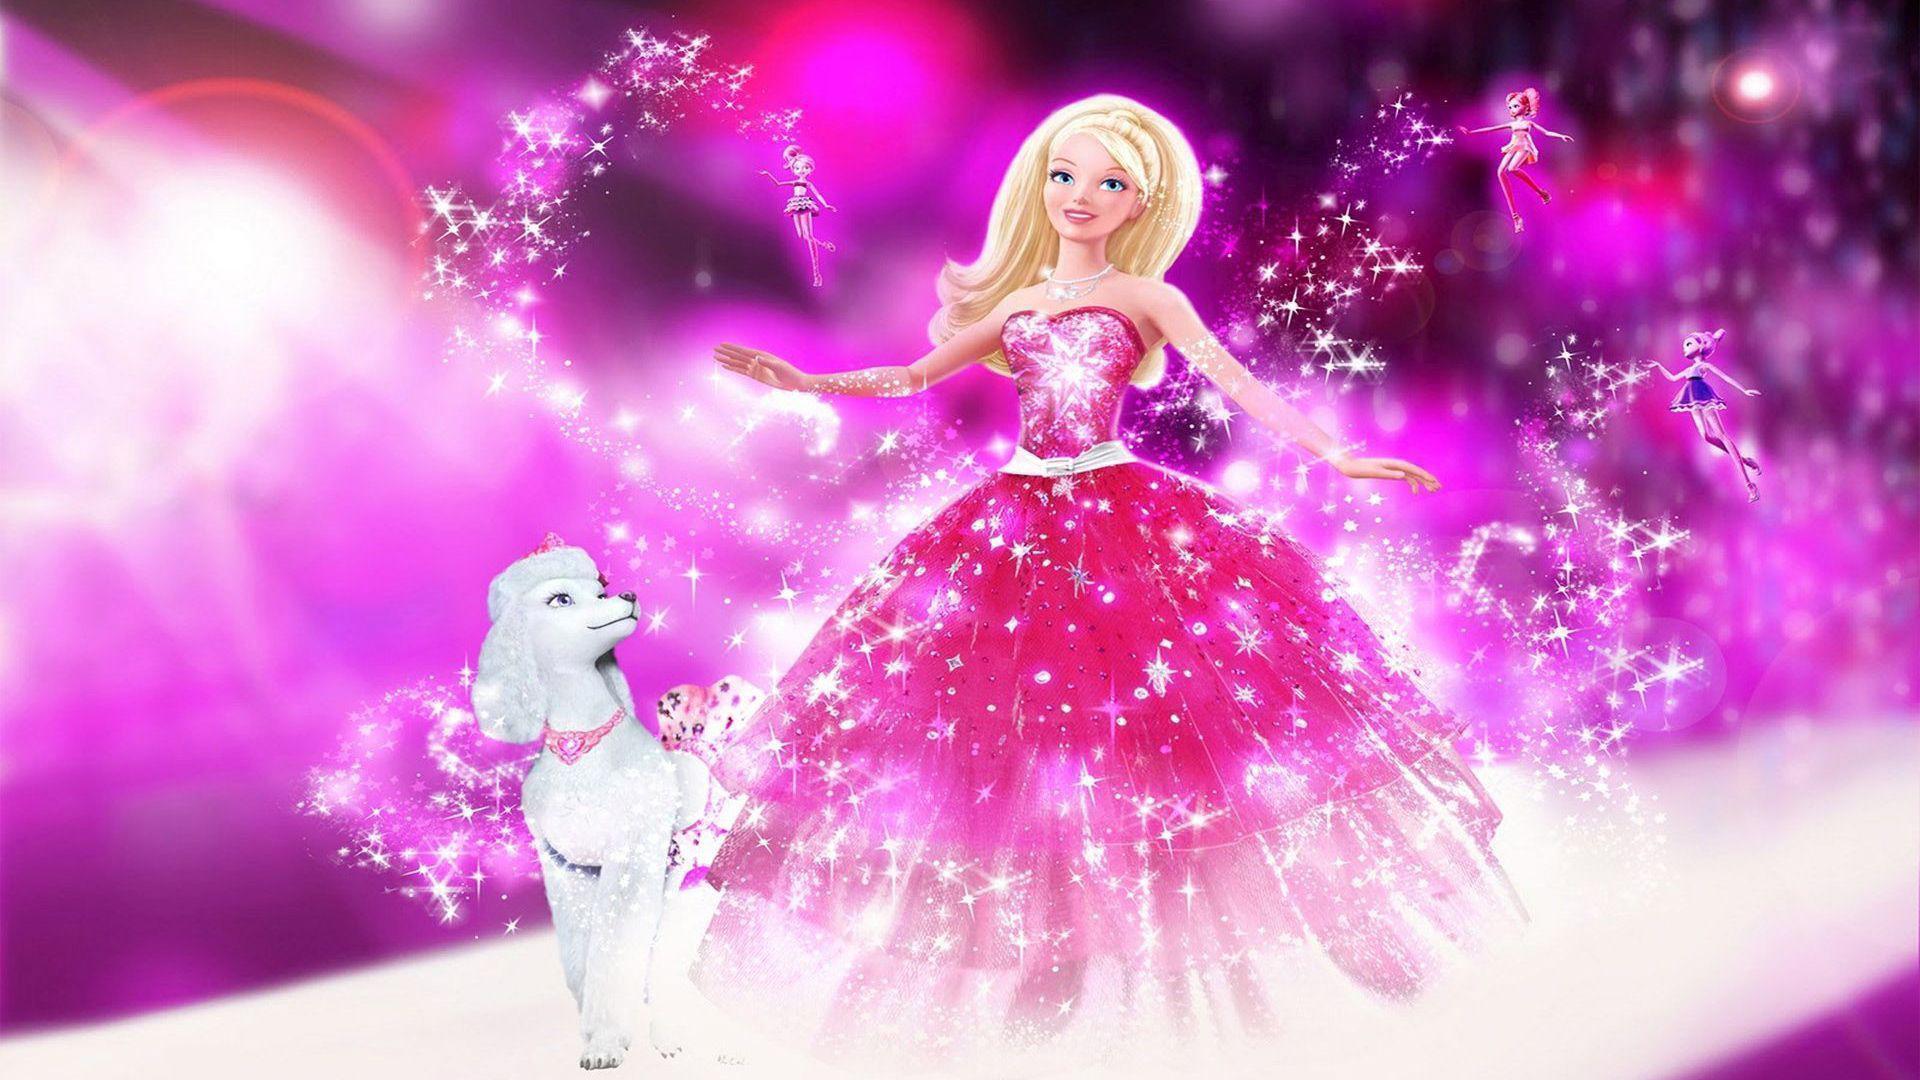 Download Doll Wallpaper - Cute Princess Free for Android - Doll Wallpaper -  Cute Princess APK Download - STEPrimo.com